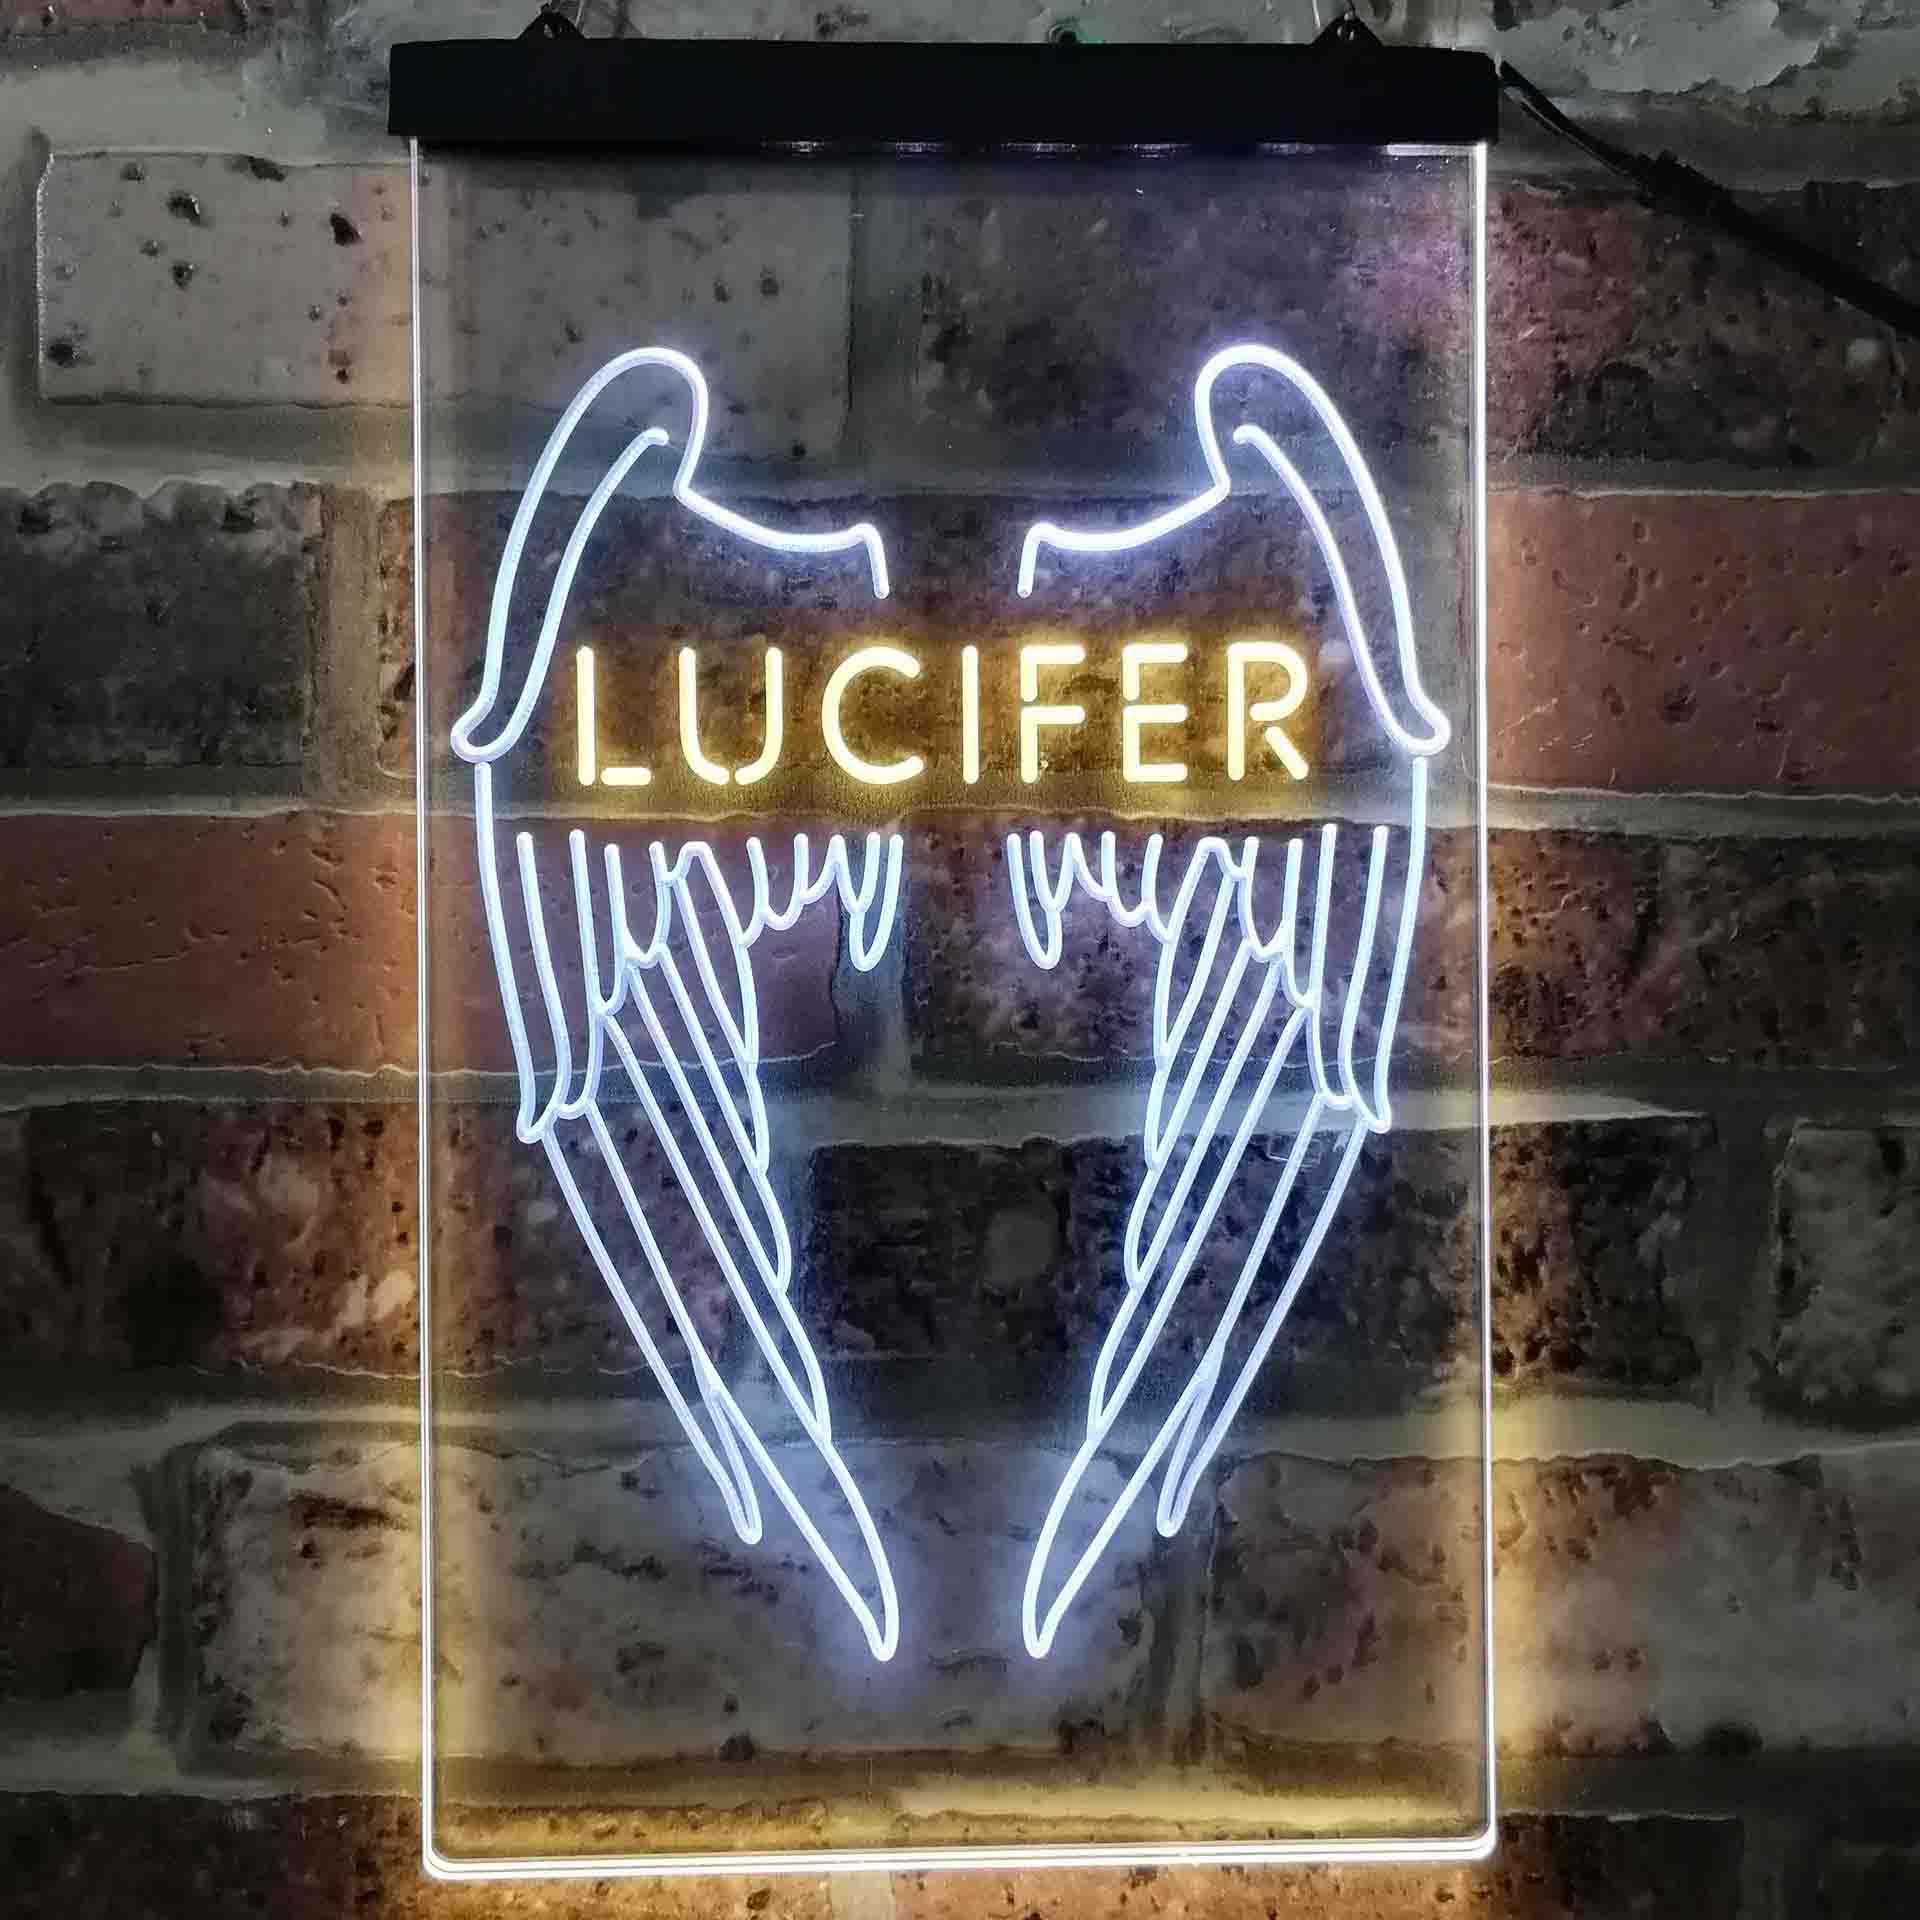 DC Comics Lucifer Neon-Like LED Sign - ProLedSign